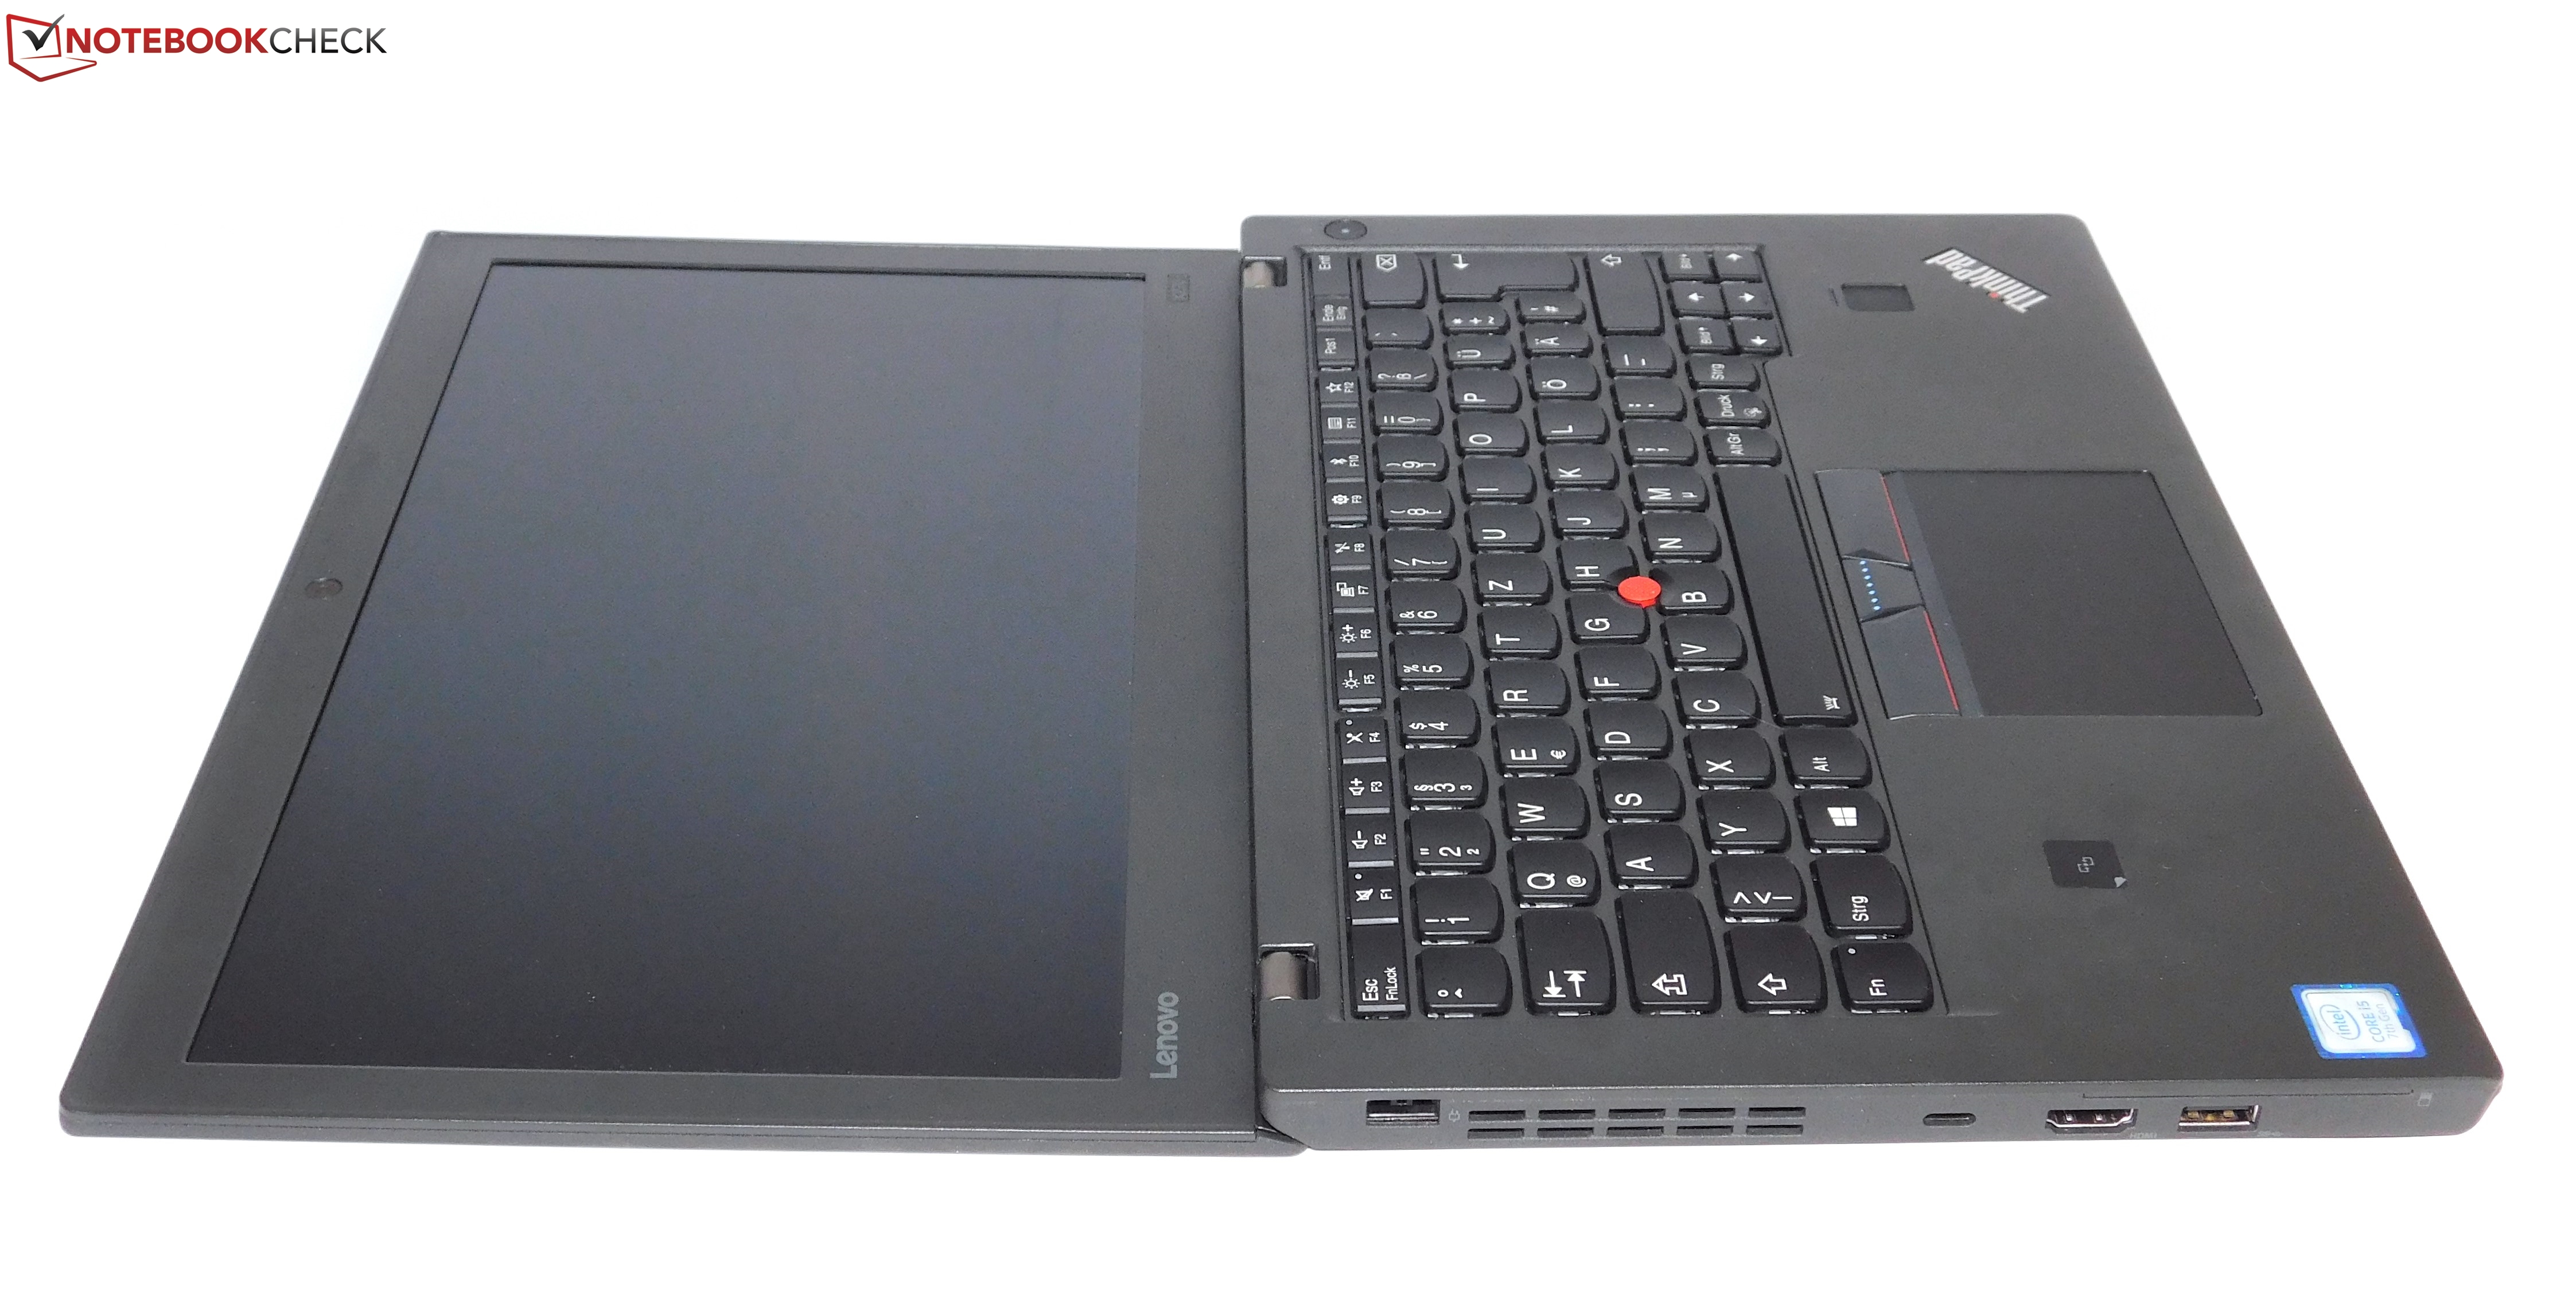 Lenovo ThinkPad X270 (Core i5, Full HD) Laptop Review - NotebookCheck